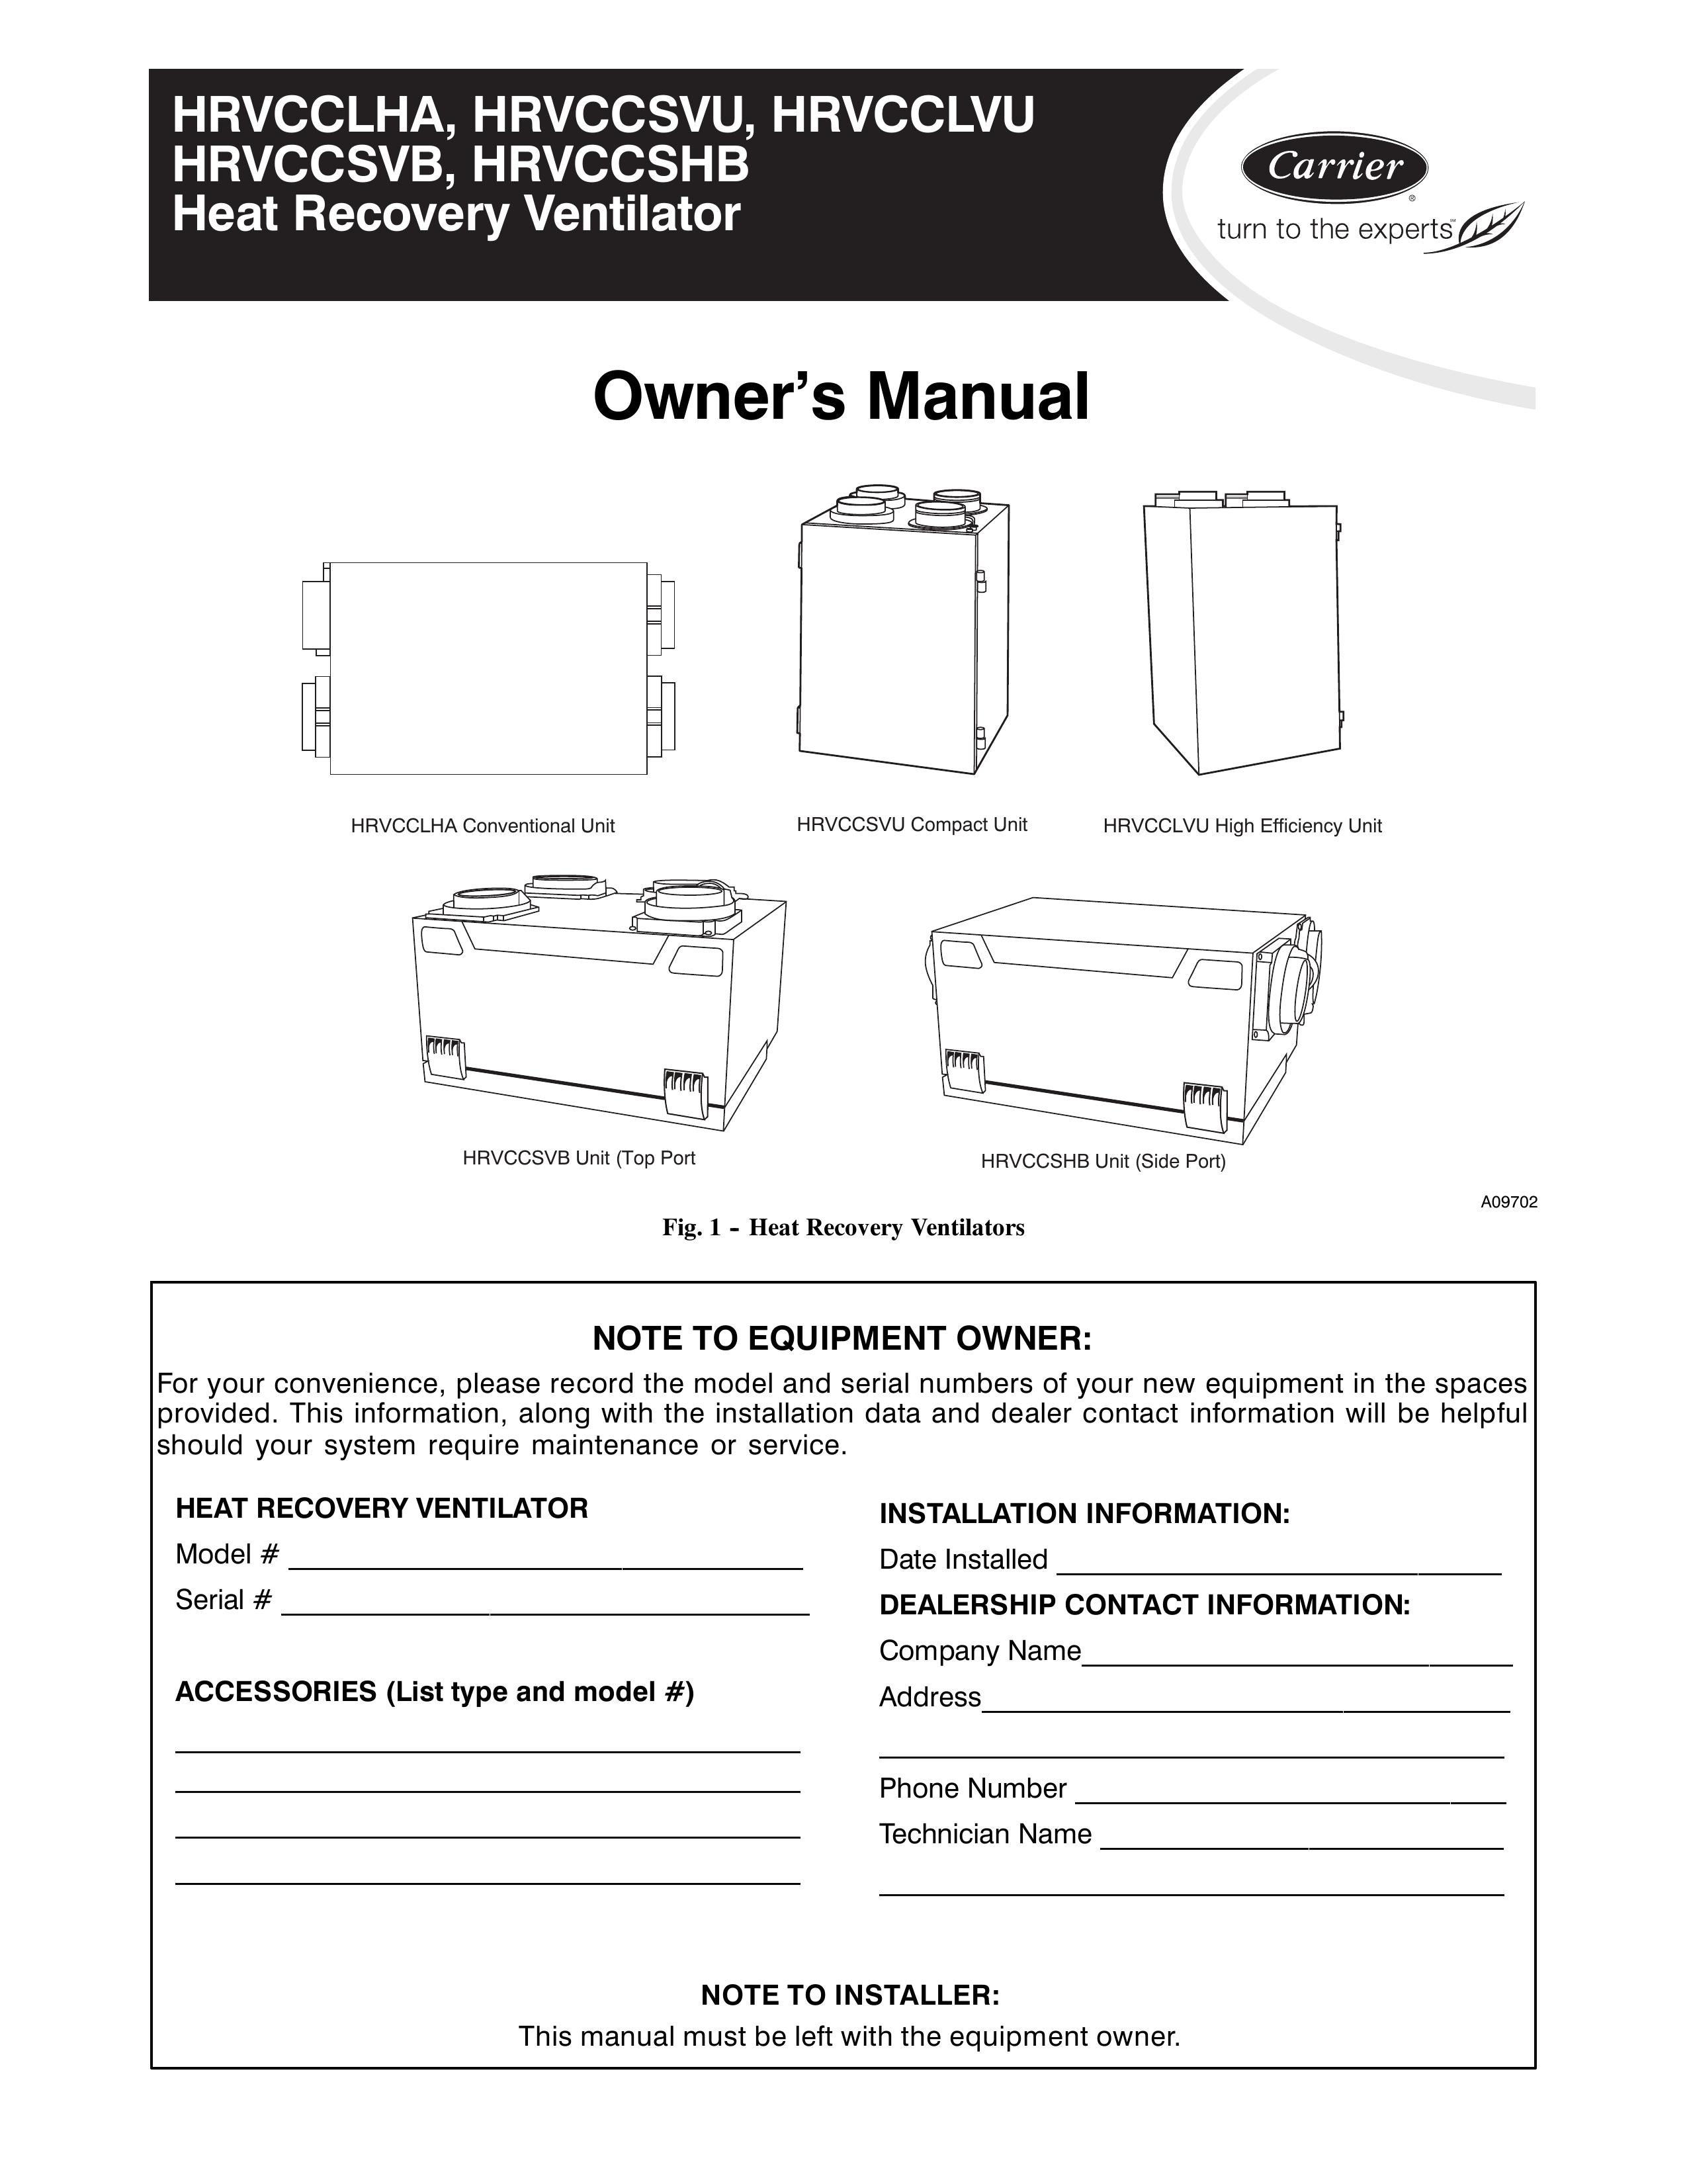 Carrier HRVCCSVB Ventilation Hood User Manual